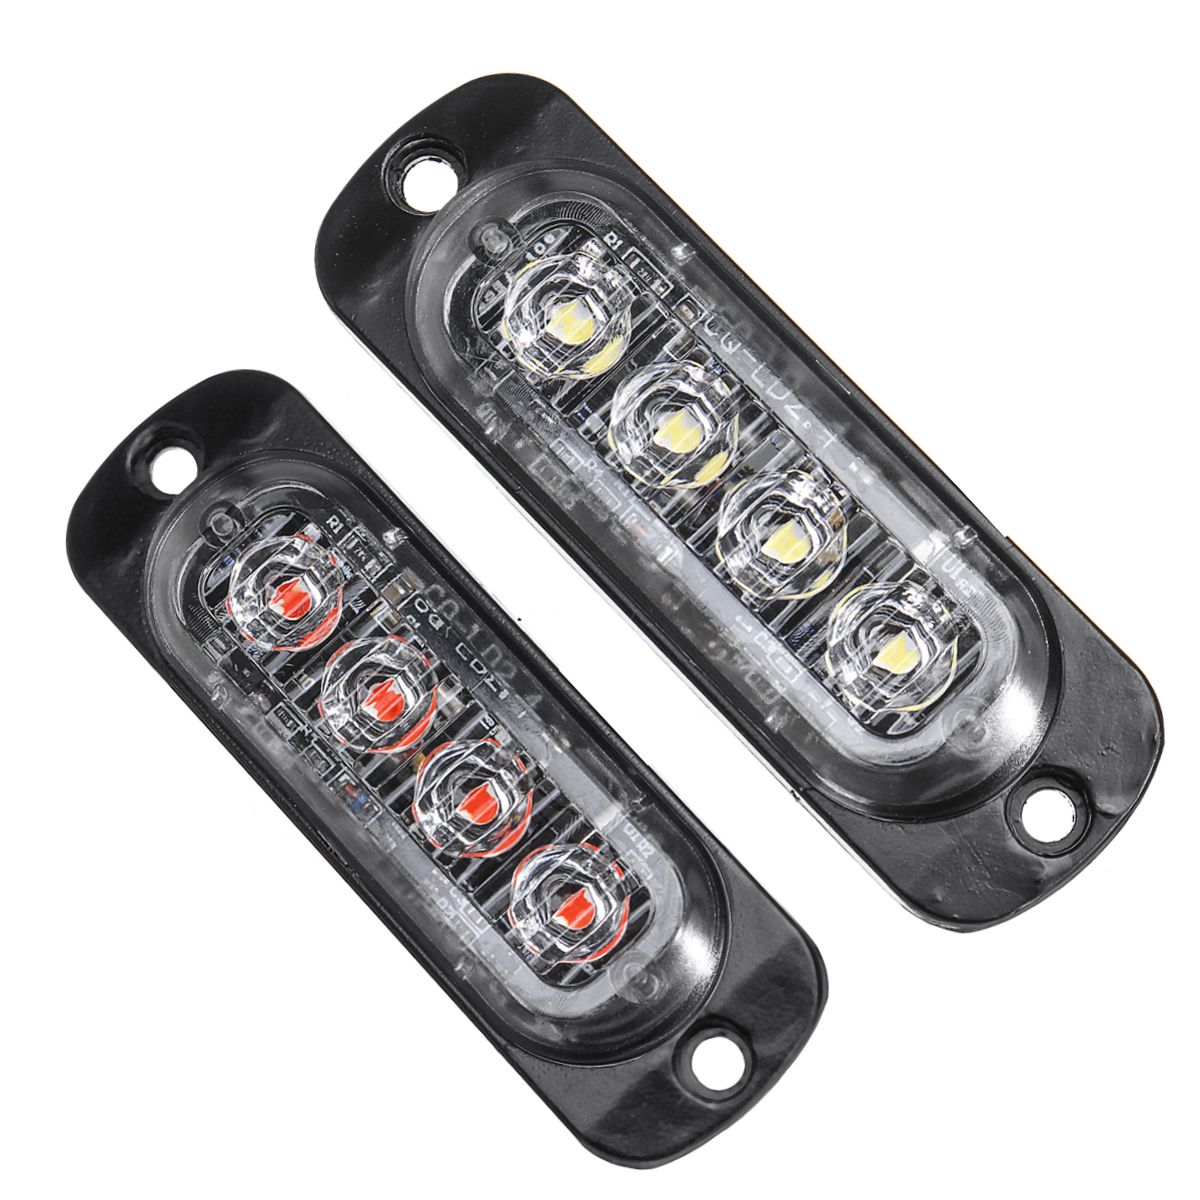 12W-4-LED-Flash-Strobe-Warning-Light-Emergency-Lamp-RedWhite-1224V-For-Car-Truck-Motorcycle-1553112